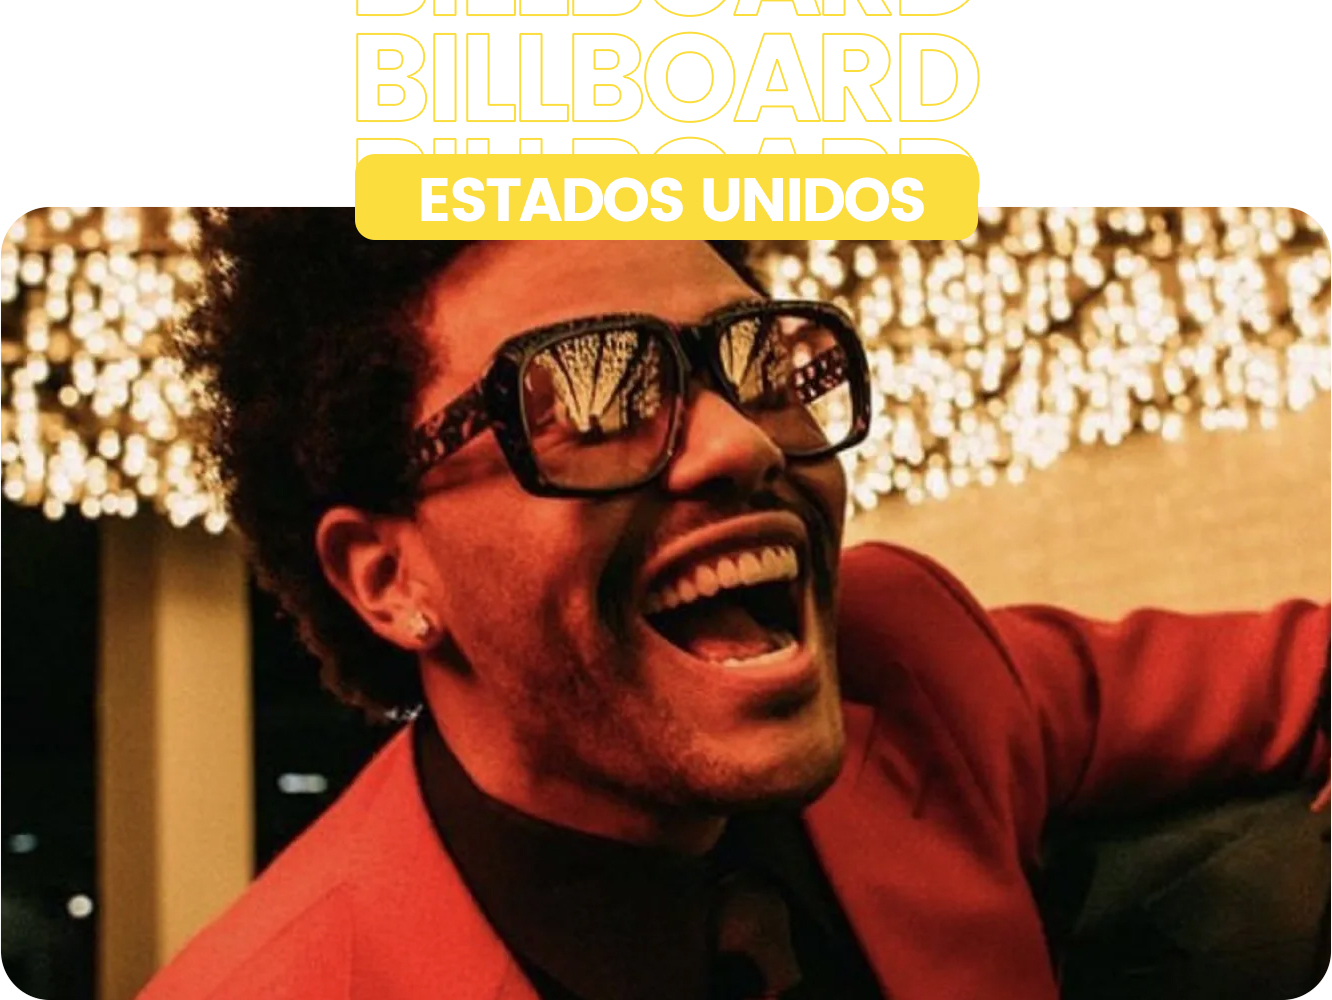  ‘Blinding Lights’ de The Weeknd, al borde del #1 en Billboard poco antes de la Super Bowl